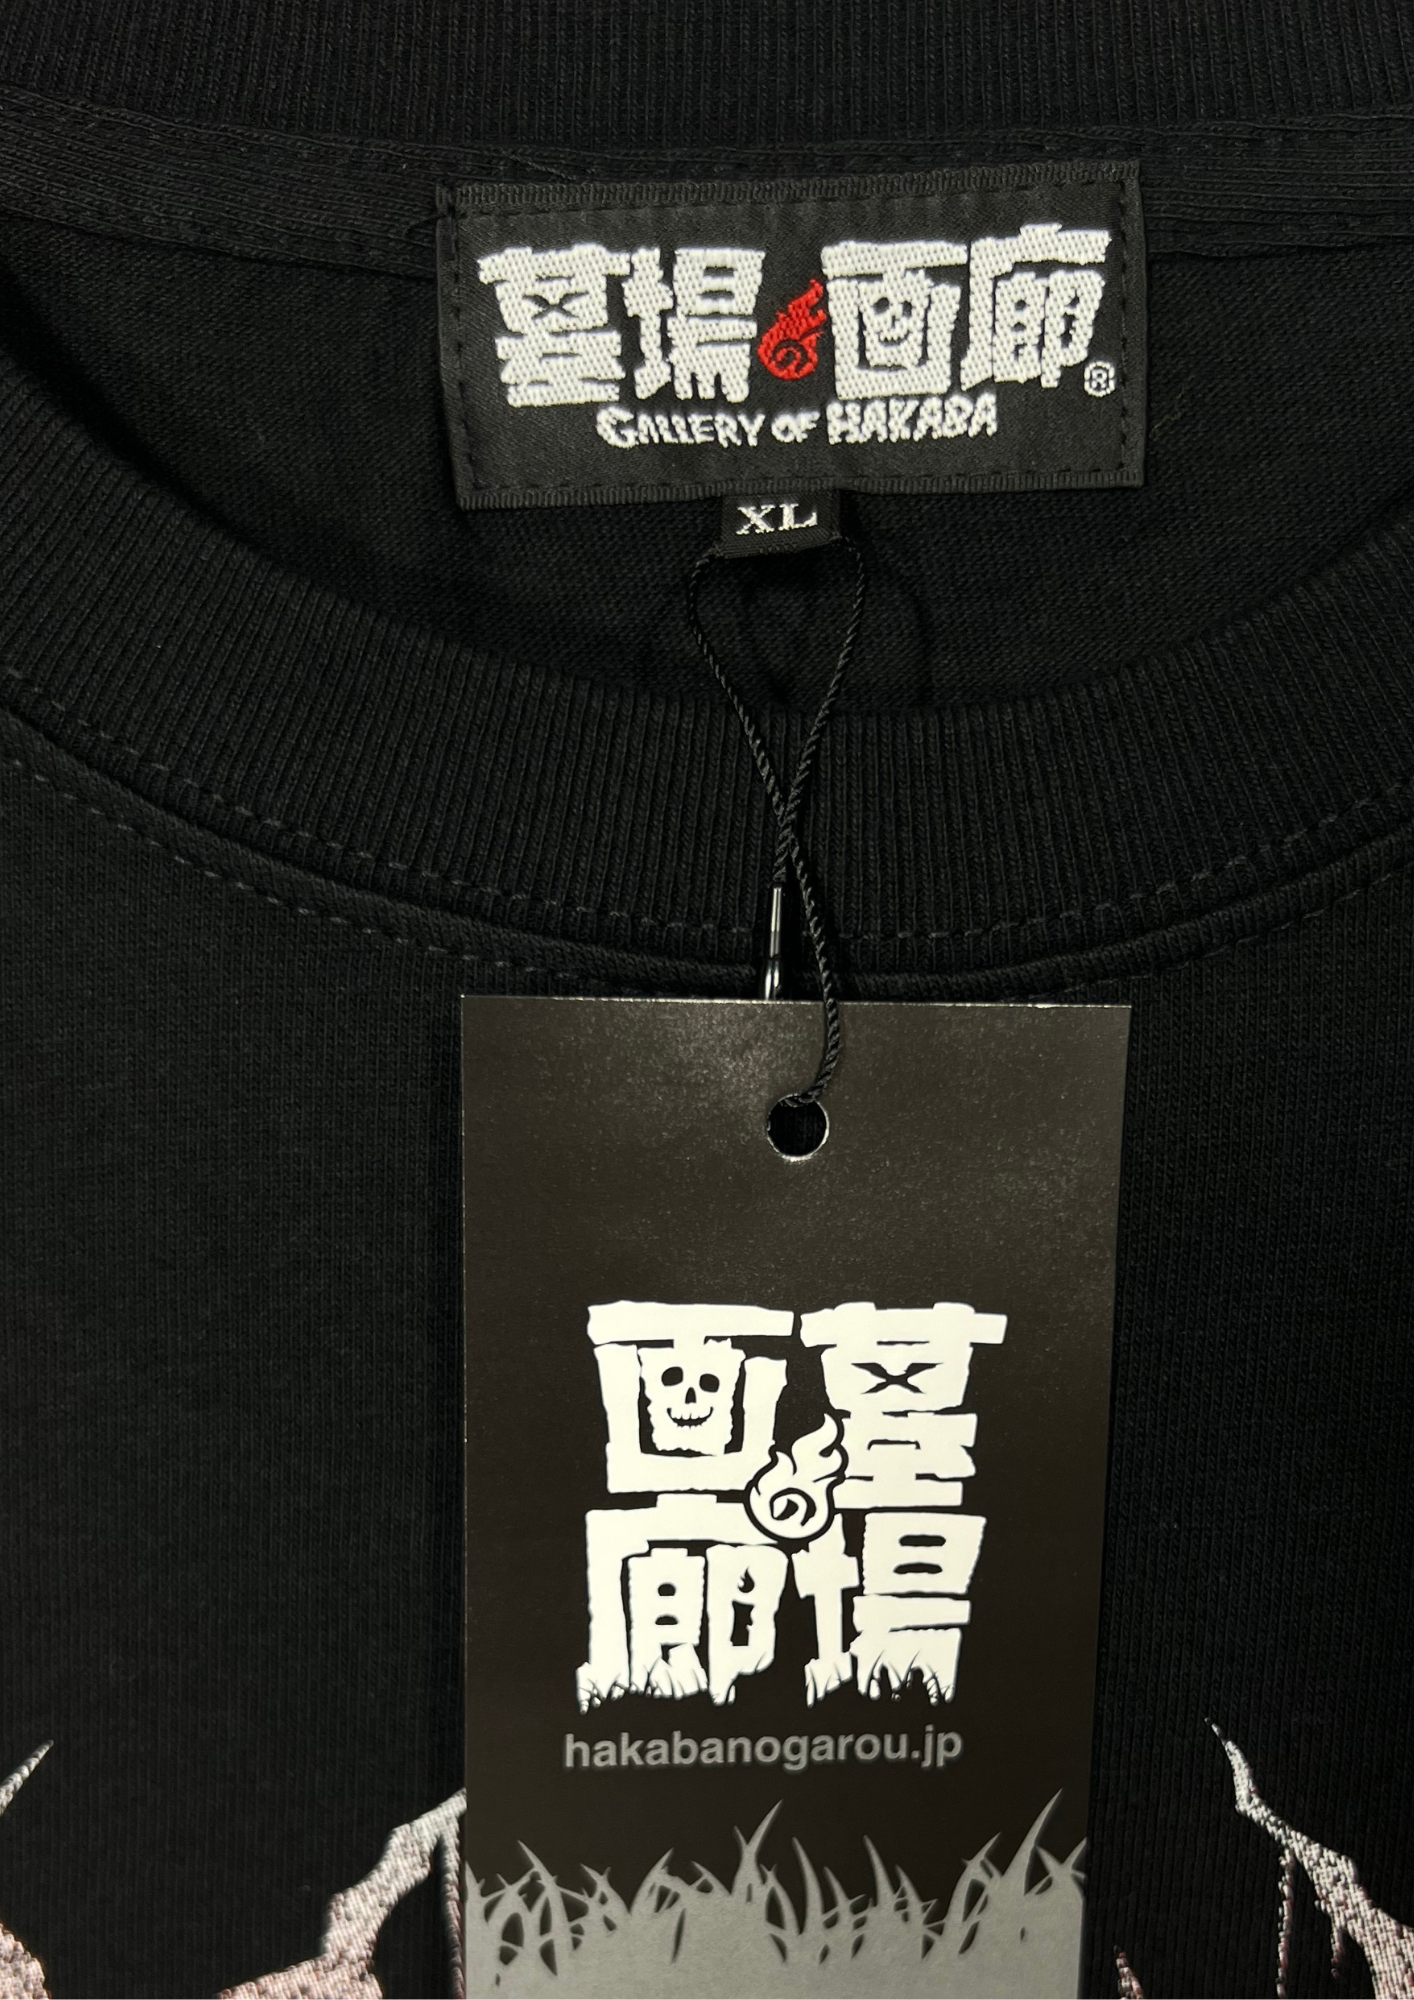 Berserk x Hakabagarou Exhibition Limited Femto T-shirt